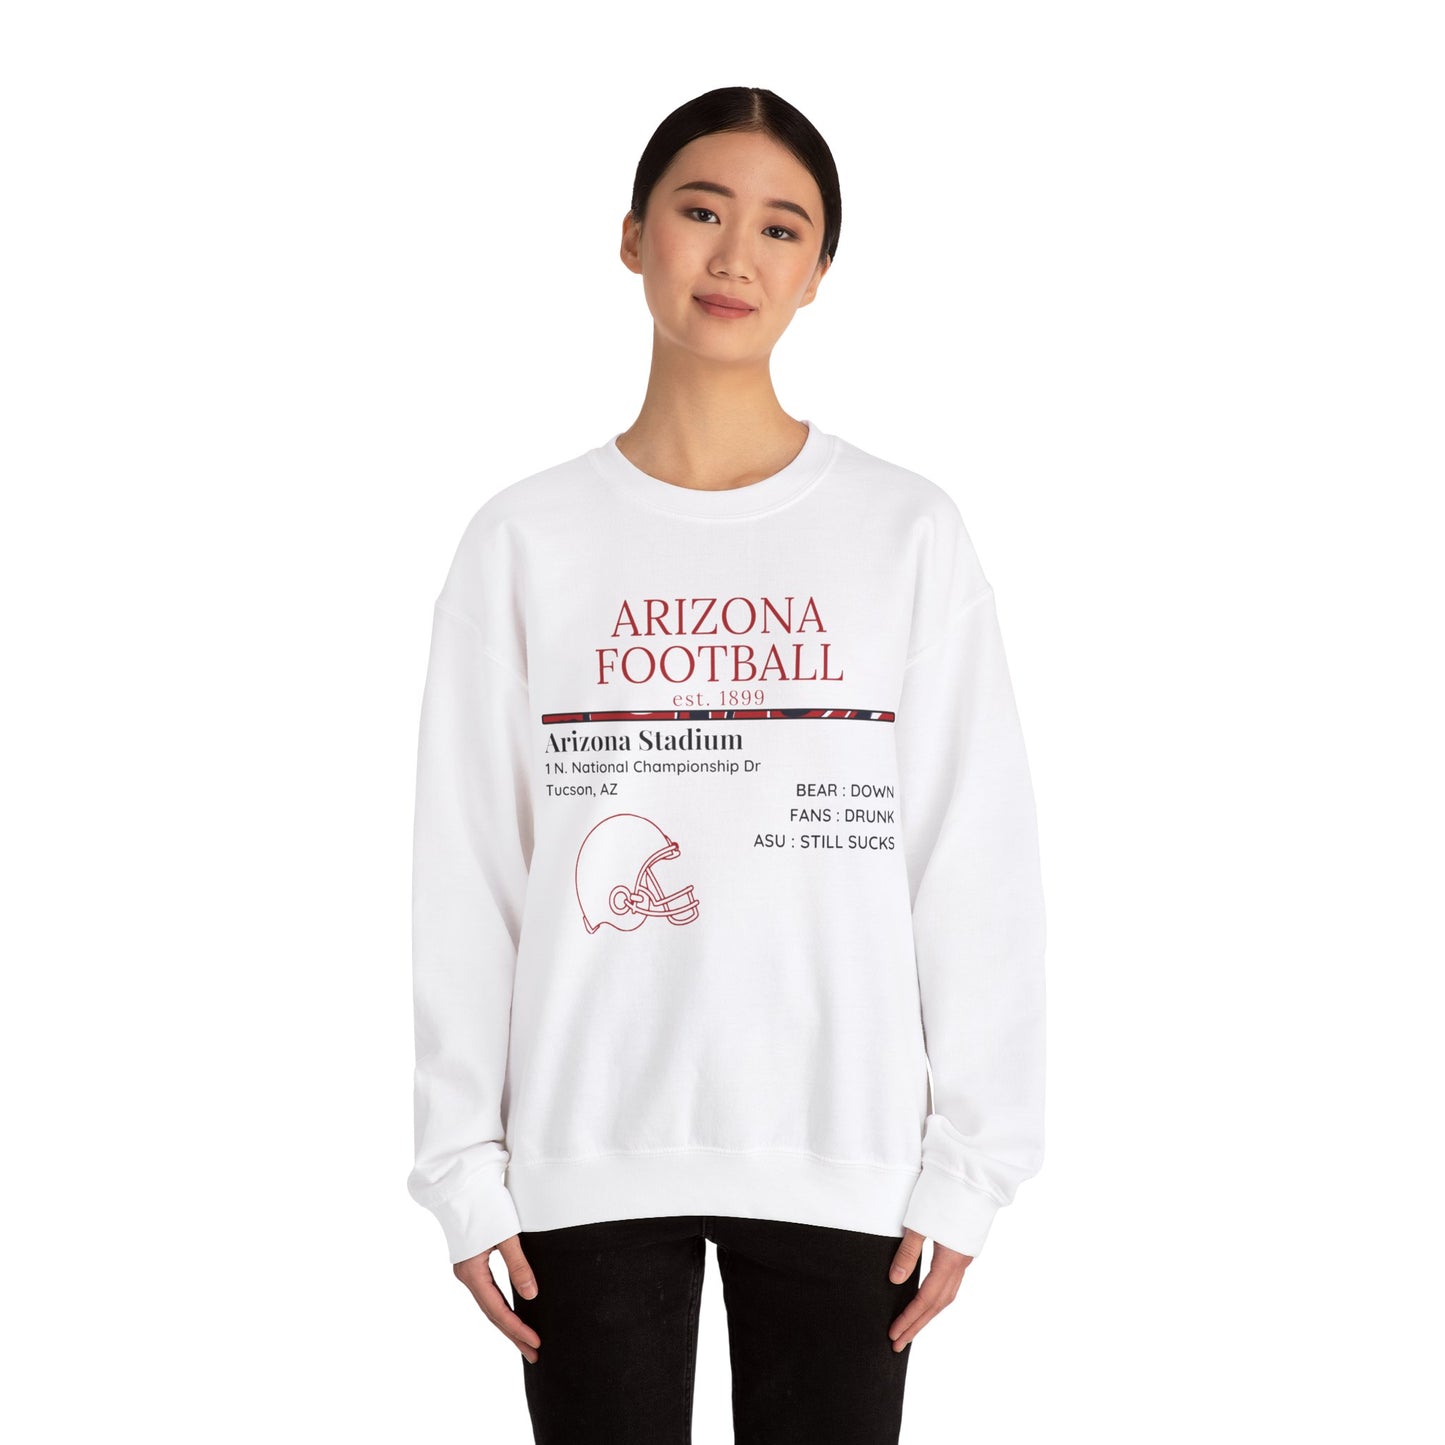 Arizona Football Sweatshirt